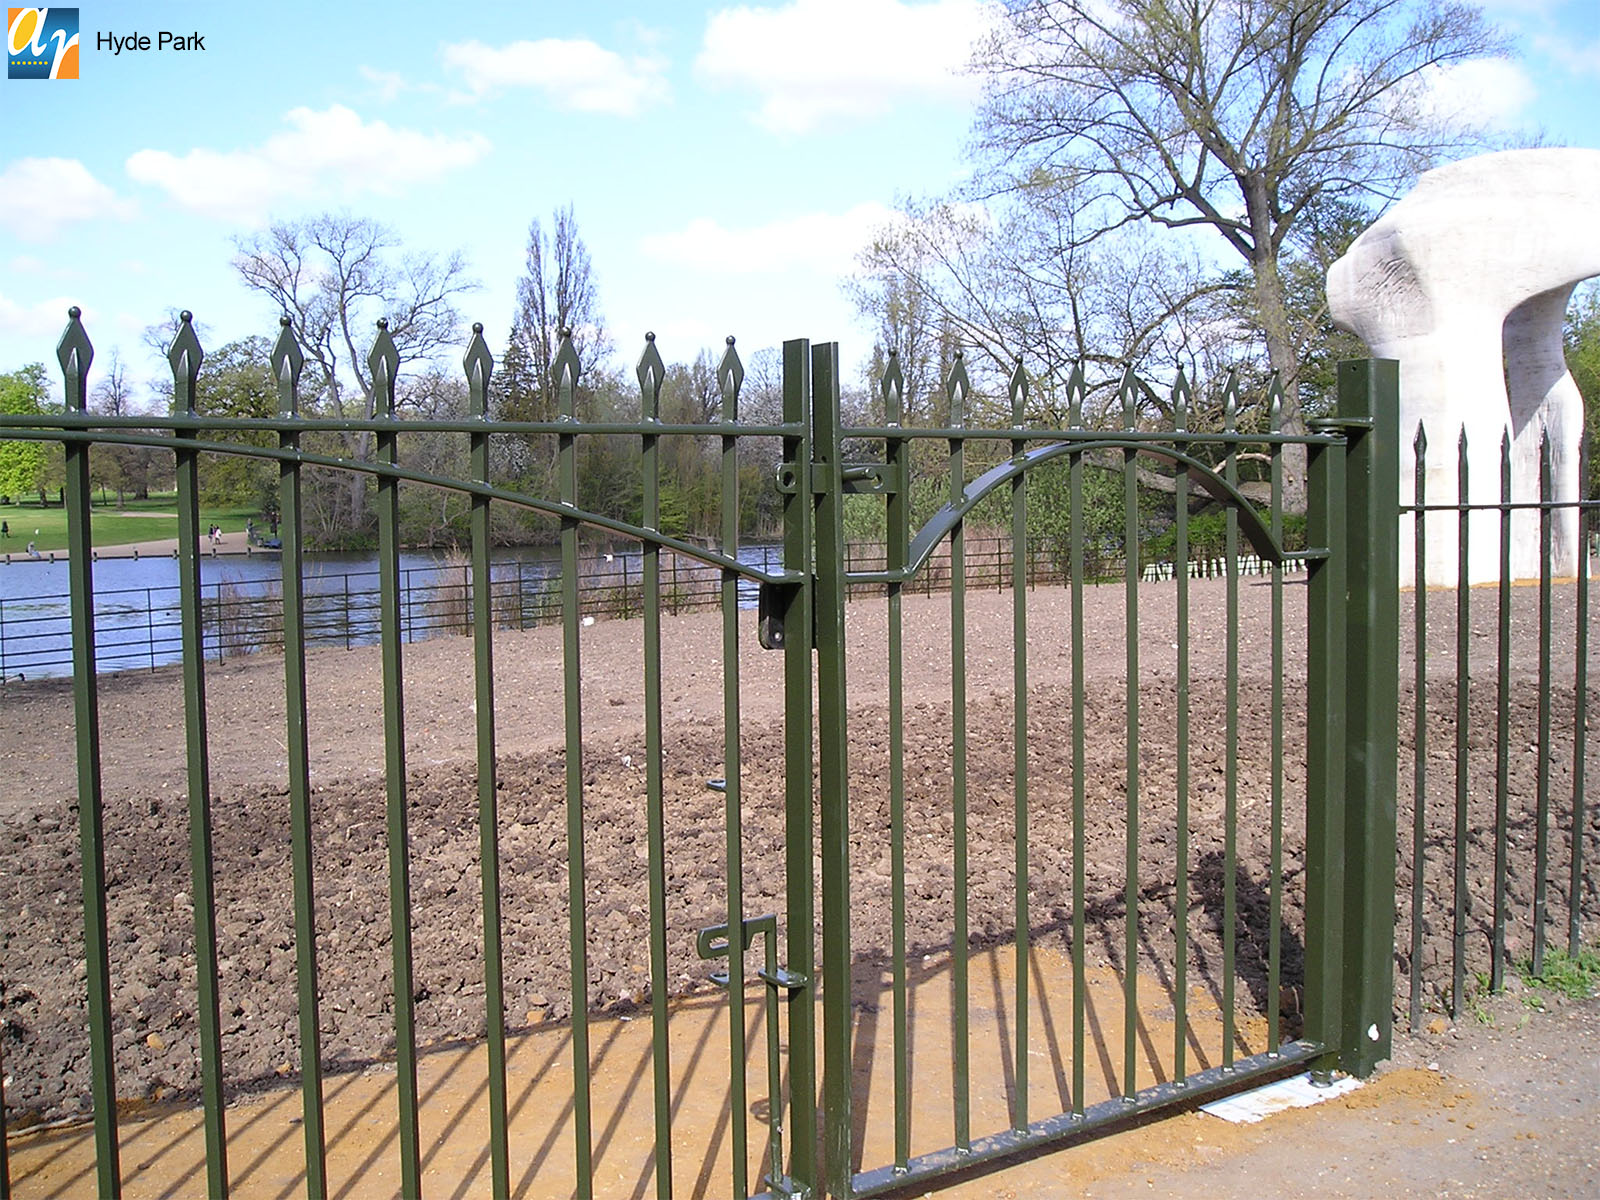 Hyde Park metal gate